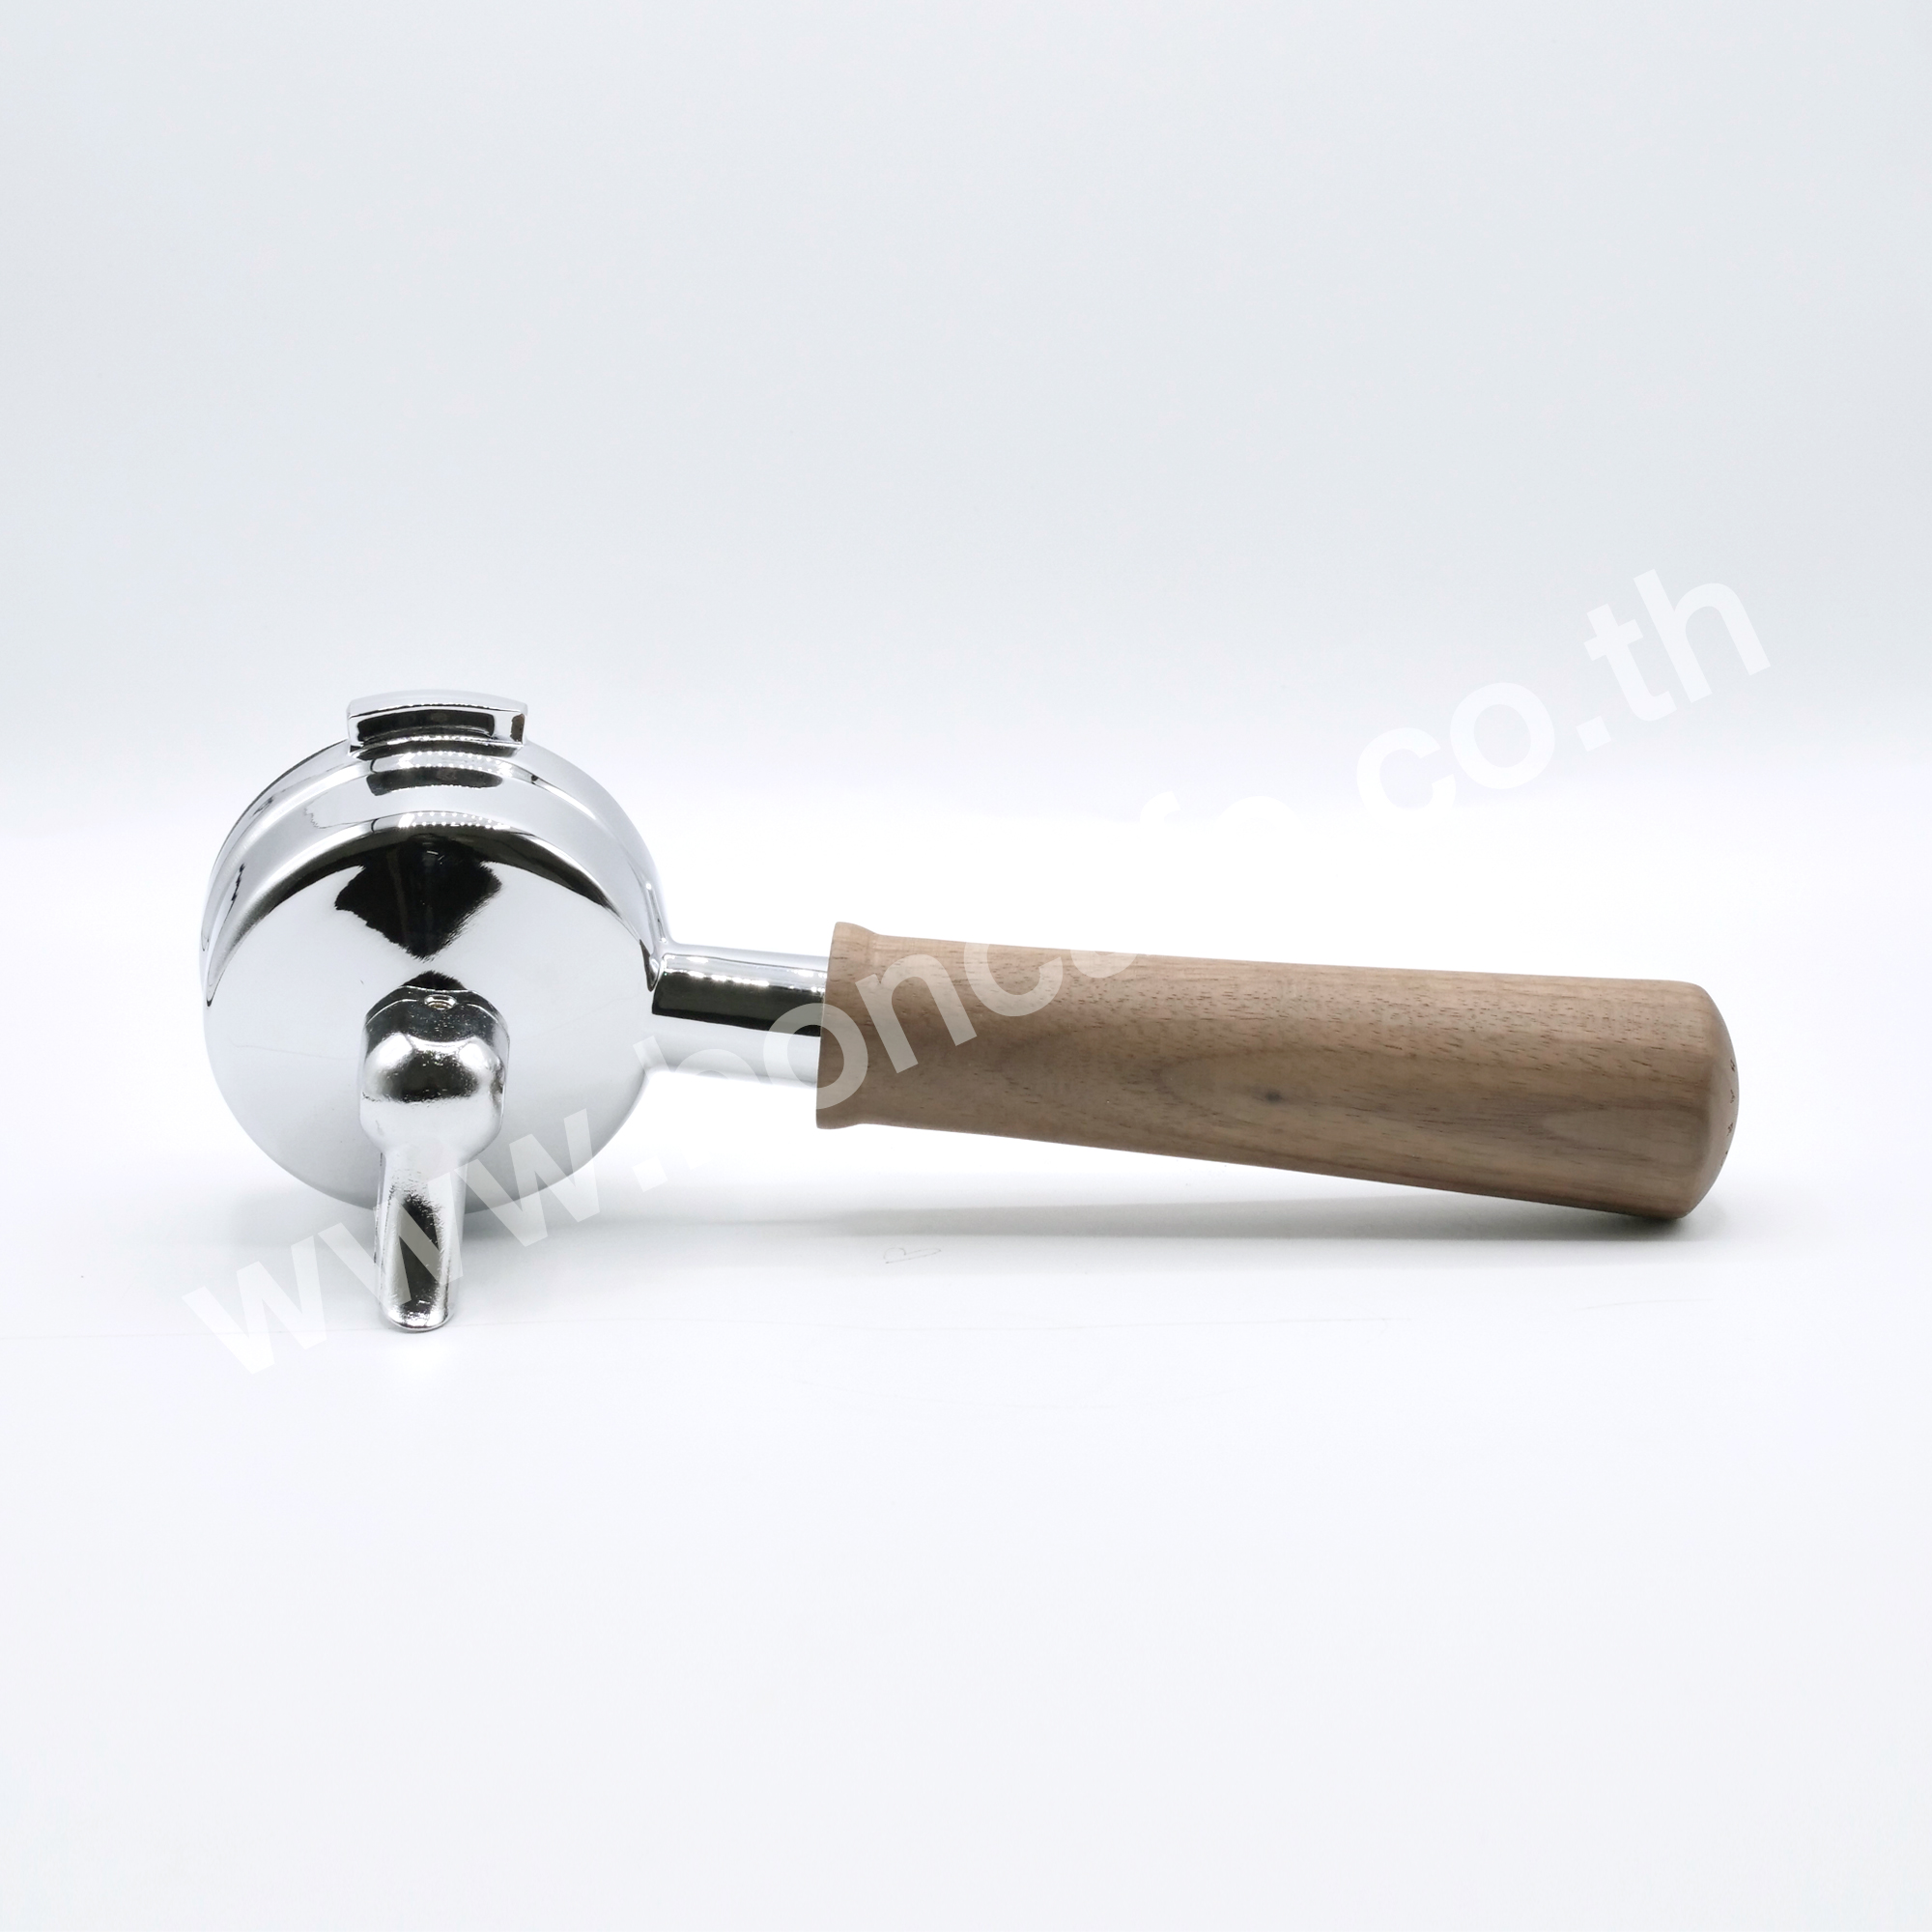 3.-Ascaso-1-Coffee-filterholder-Walnut-wood-handle